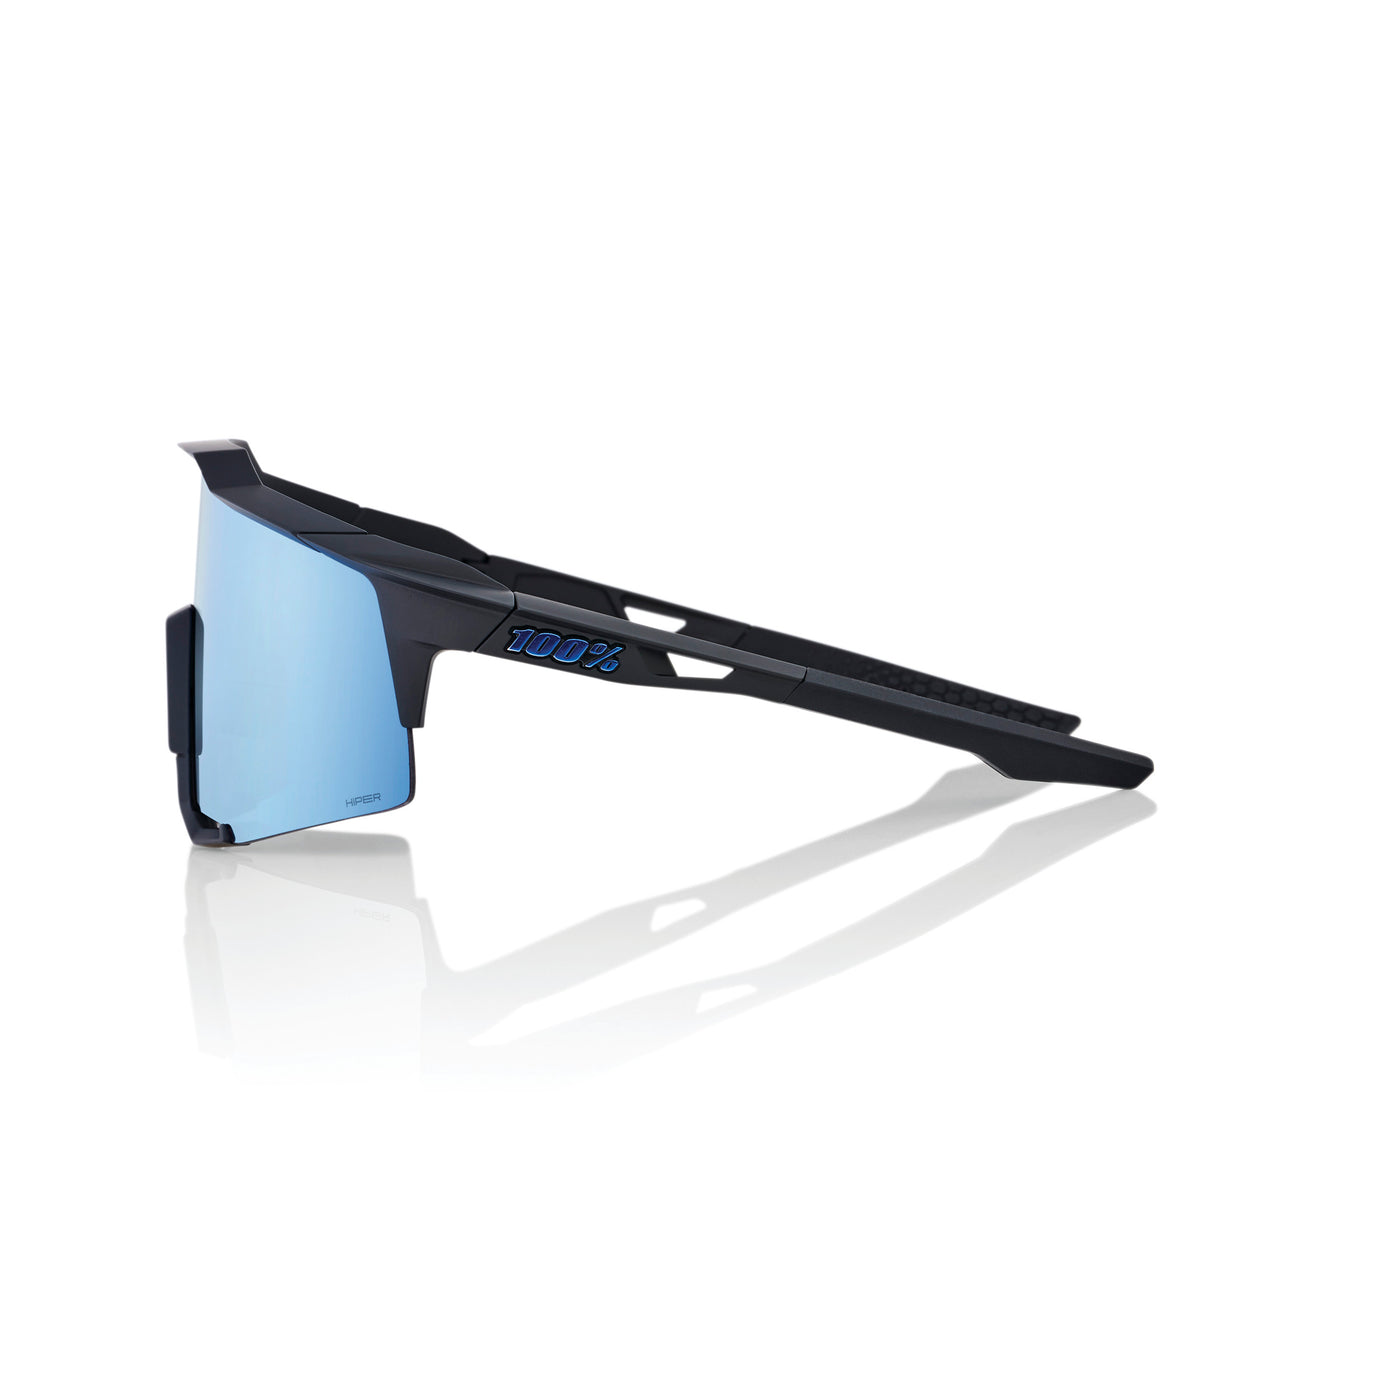 SPEEDCRAFT - Matte Black - HiPER Blue Multilayer Mirror Lens